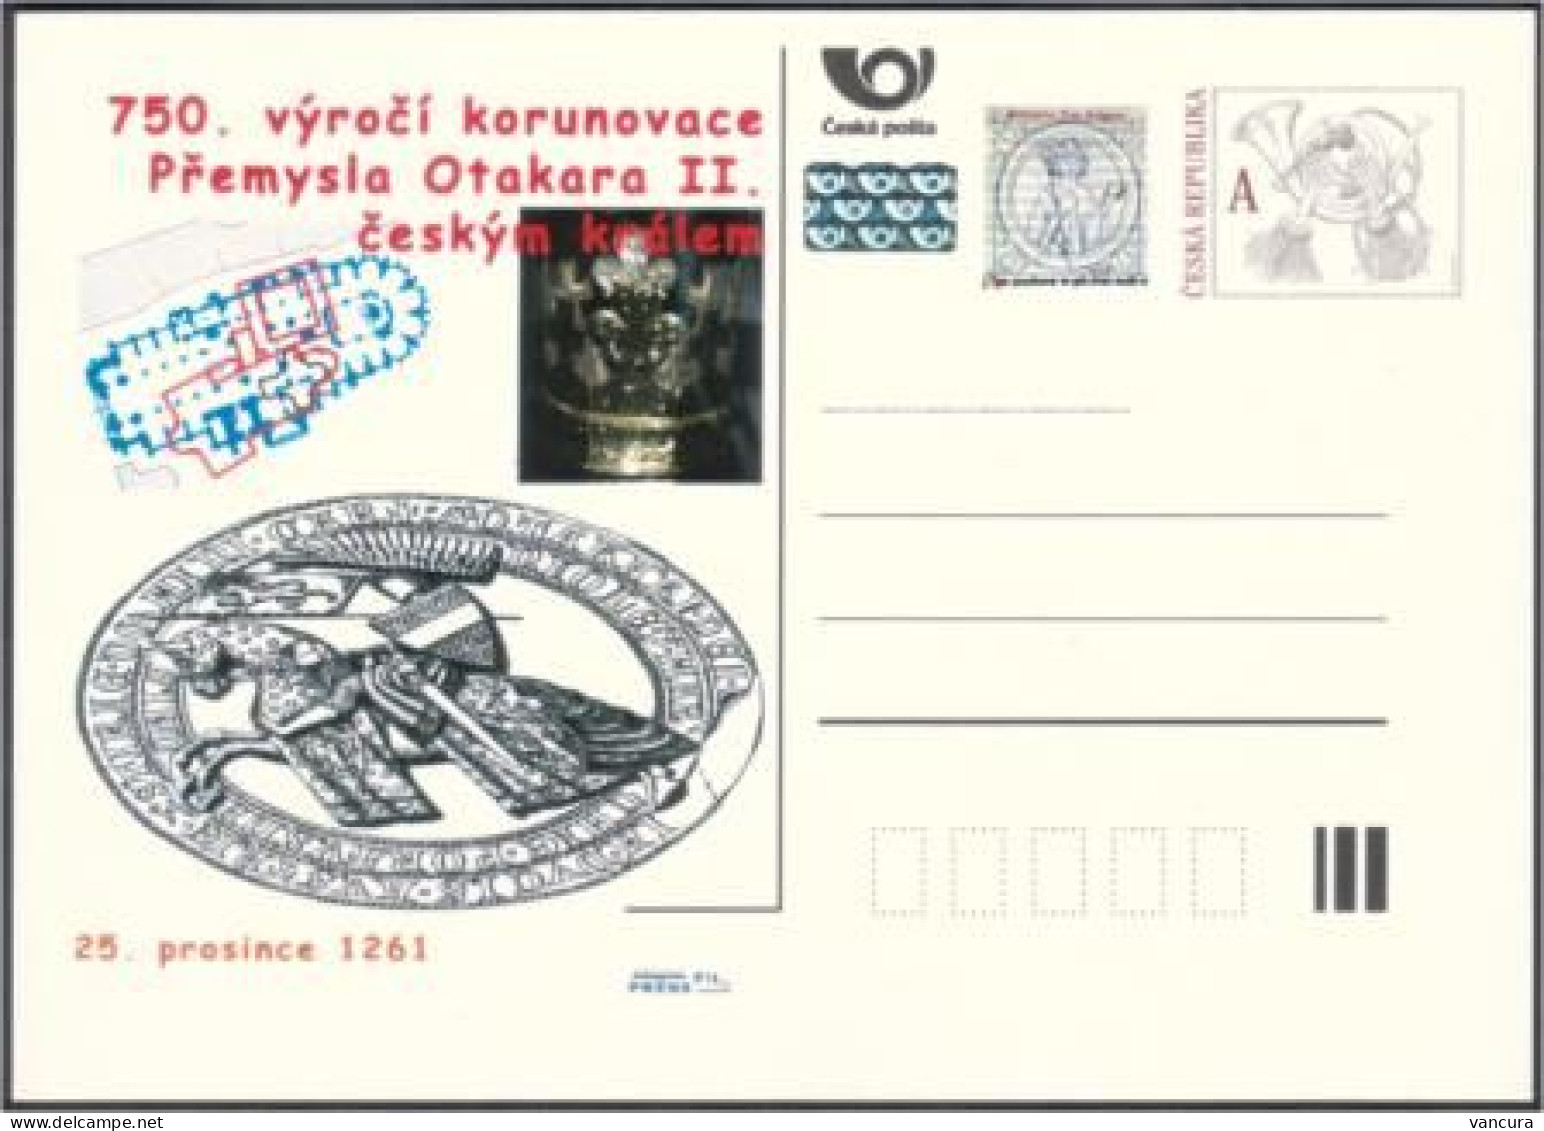 CDV C Czech Republic Anniversary Of The Coronation Of Ottokar II Premysl 2011 - Royalties, Royals